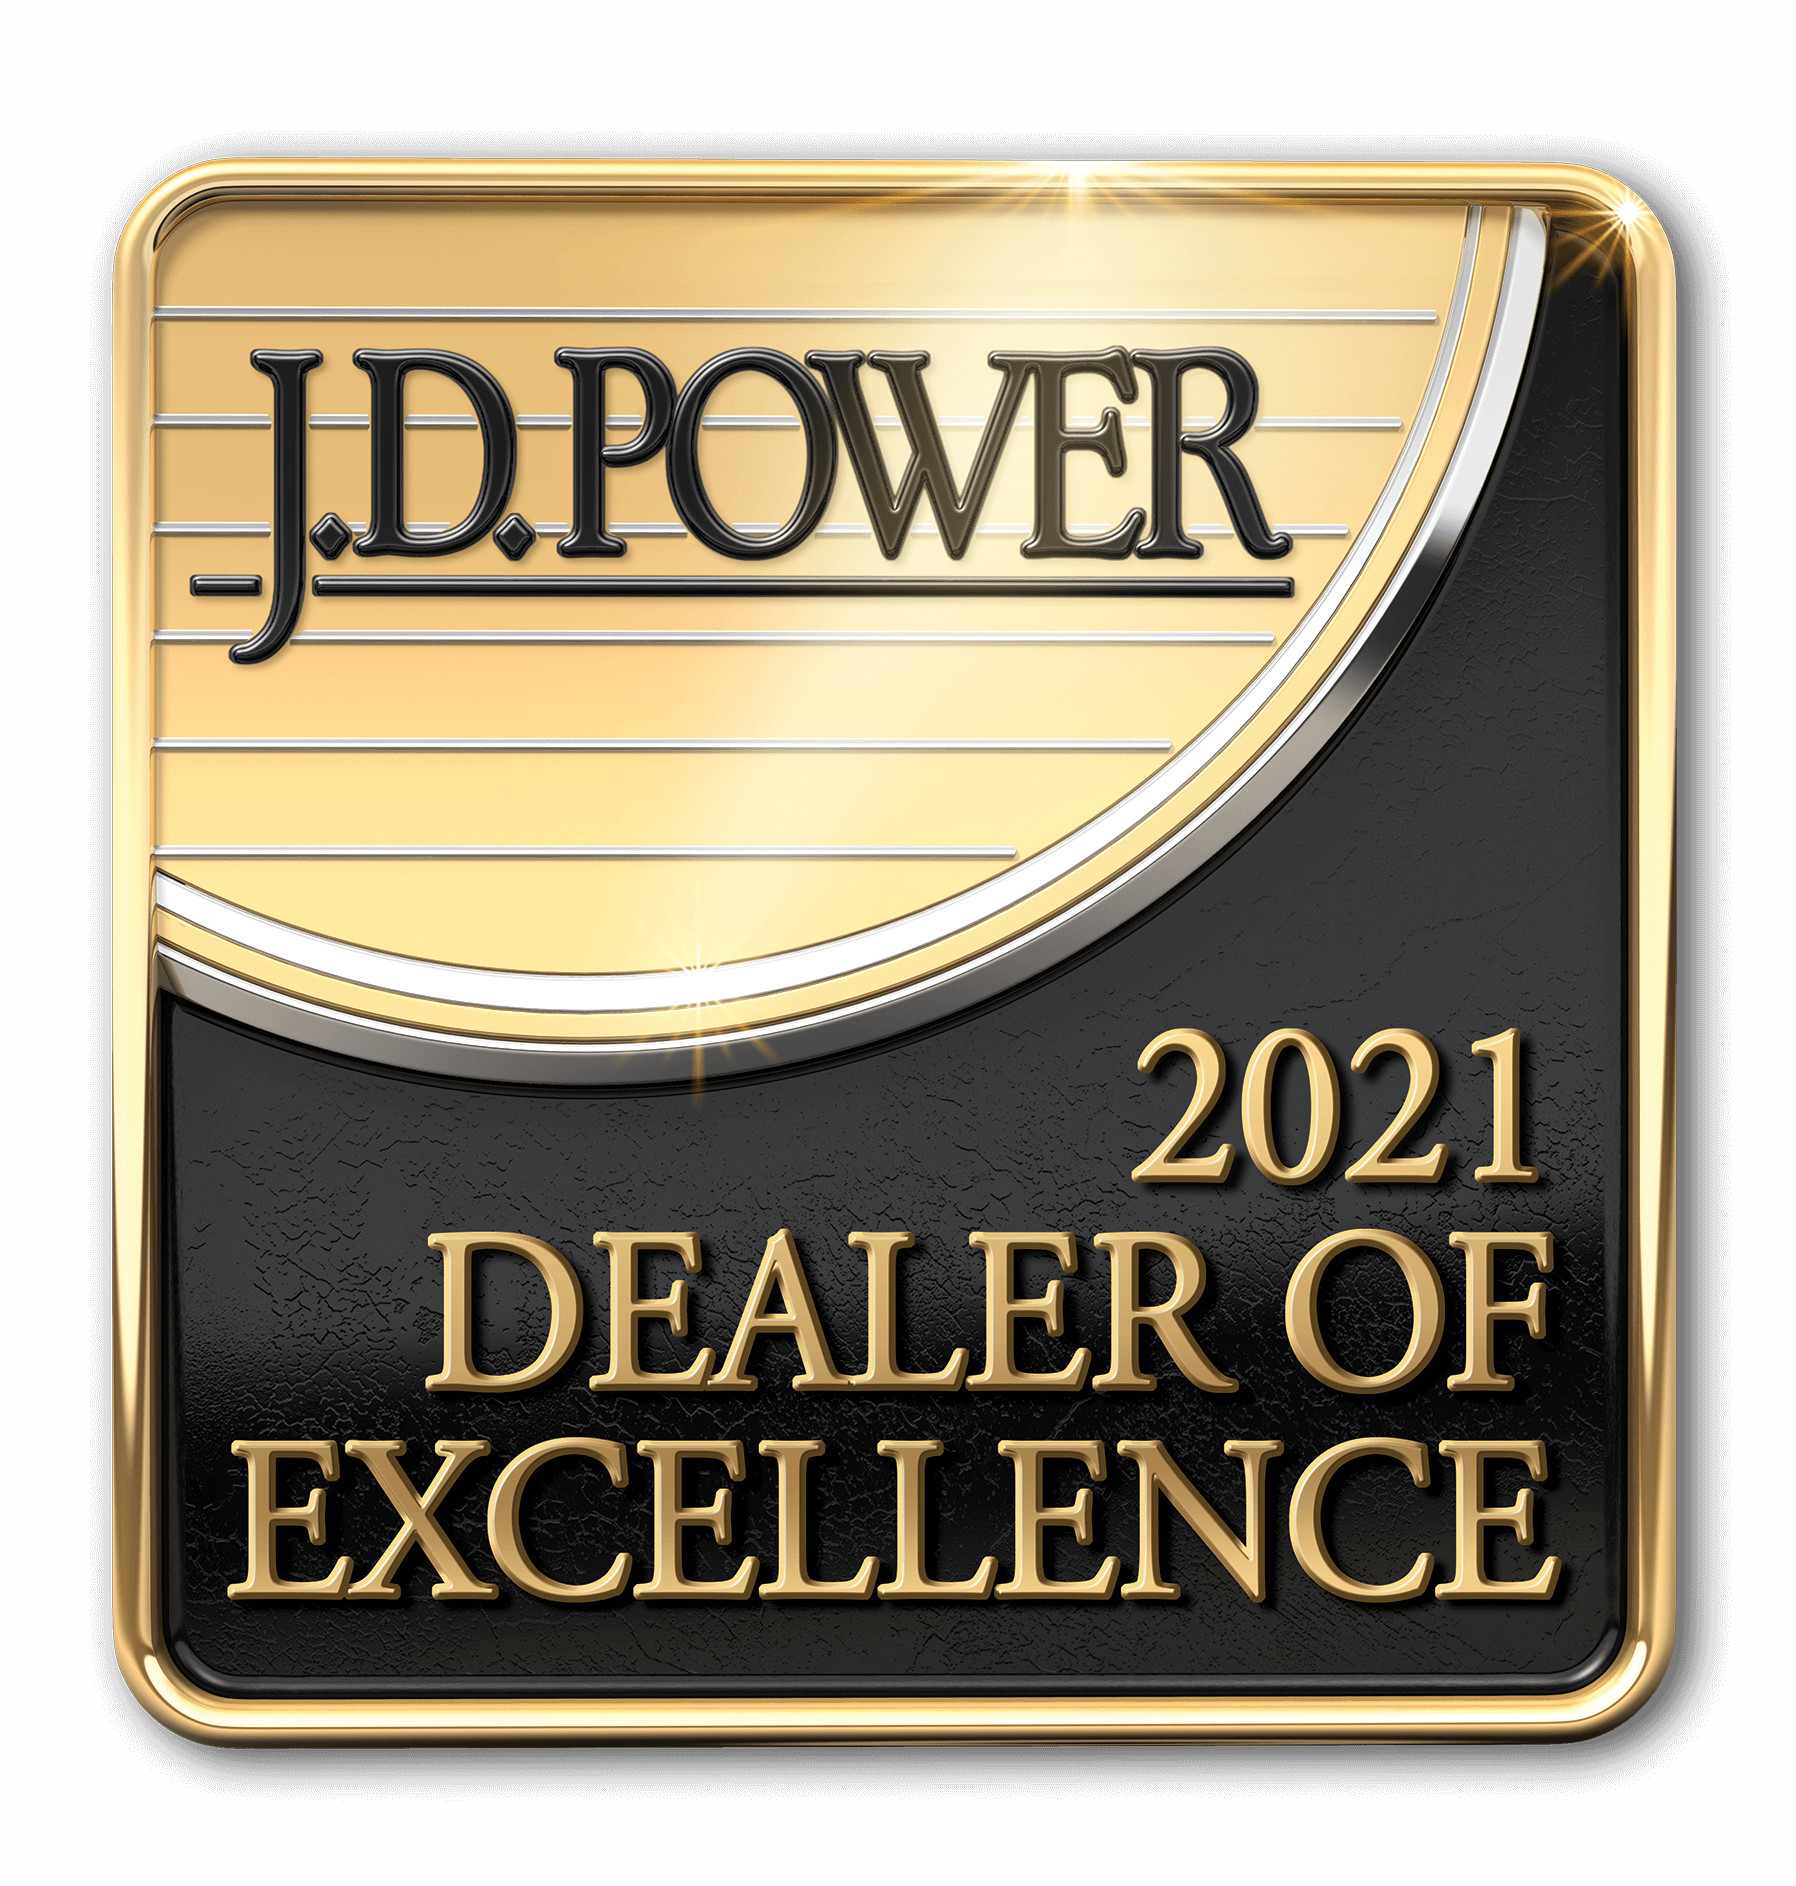 JD Power Dealer of Excellence 2020